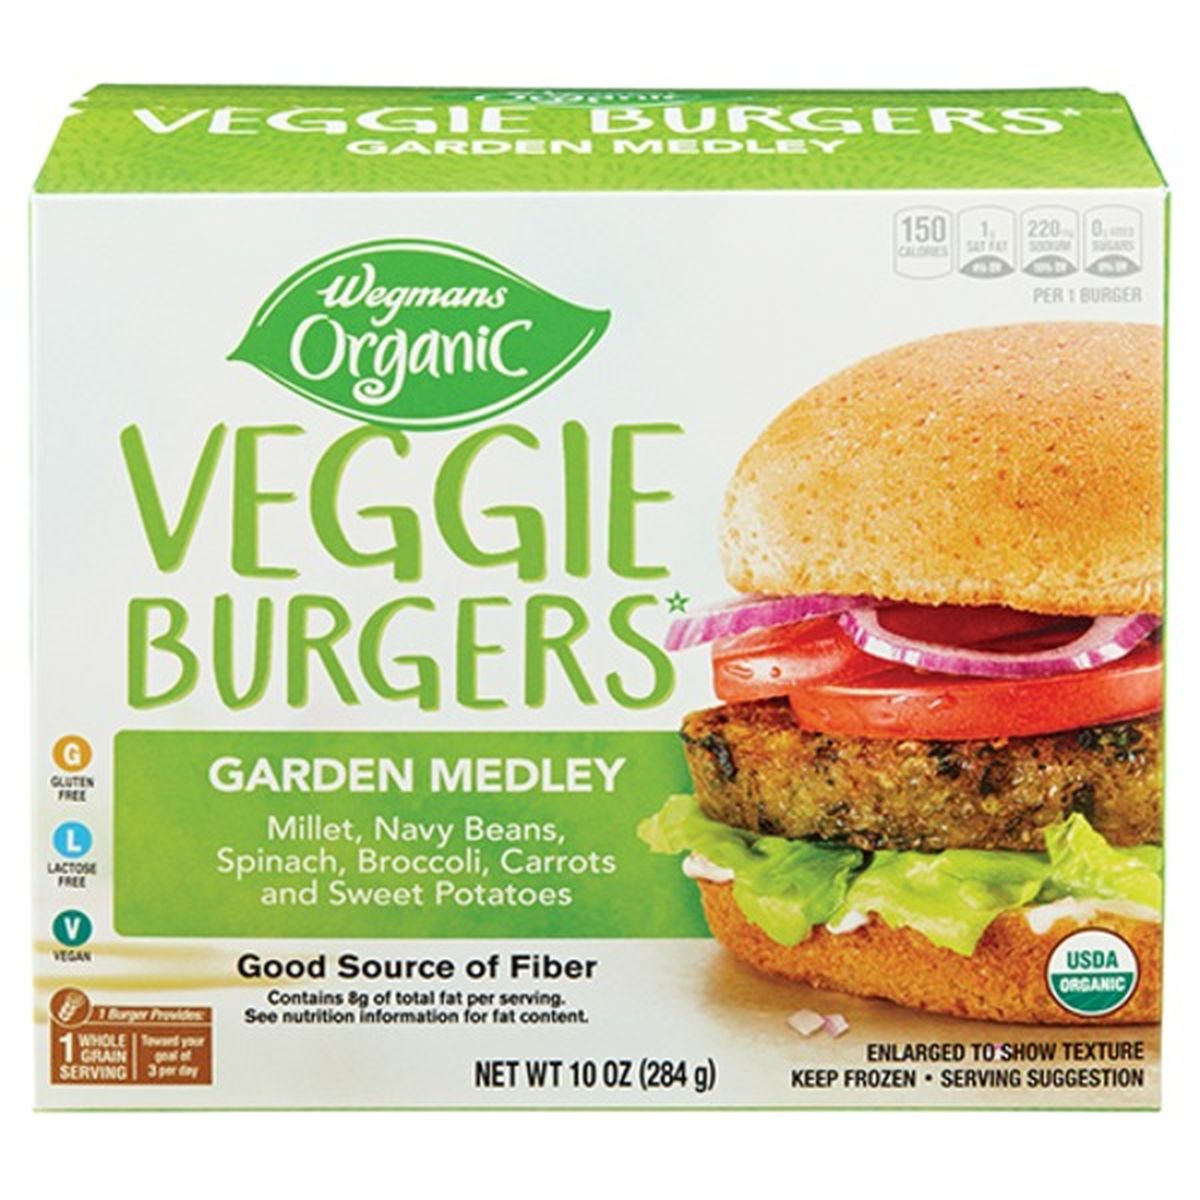 Calories in Wegmans Organic Veggie Burgers, Garden Medley